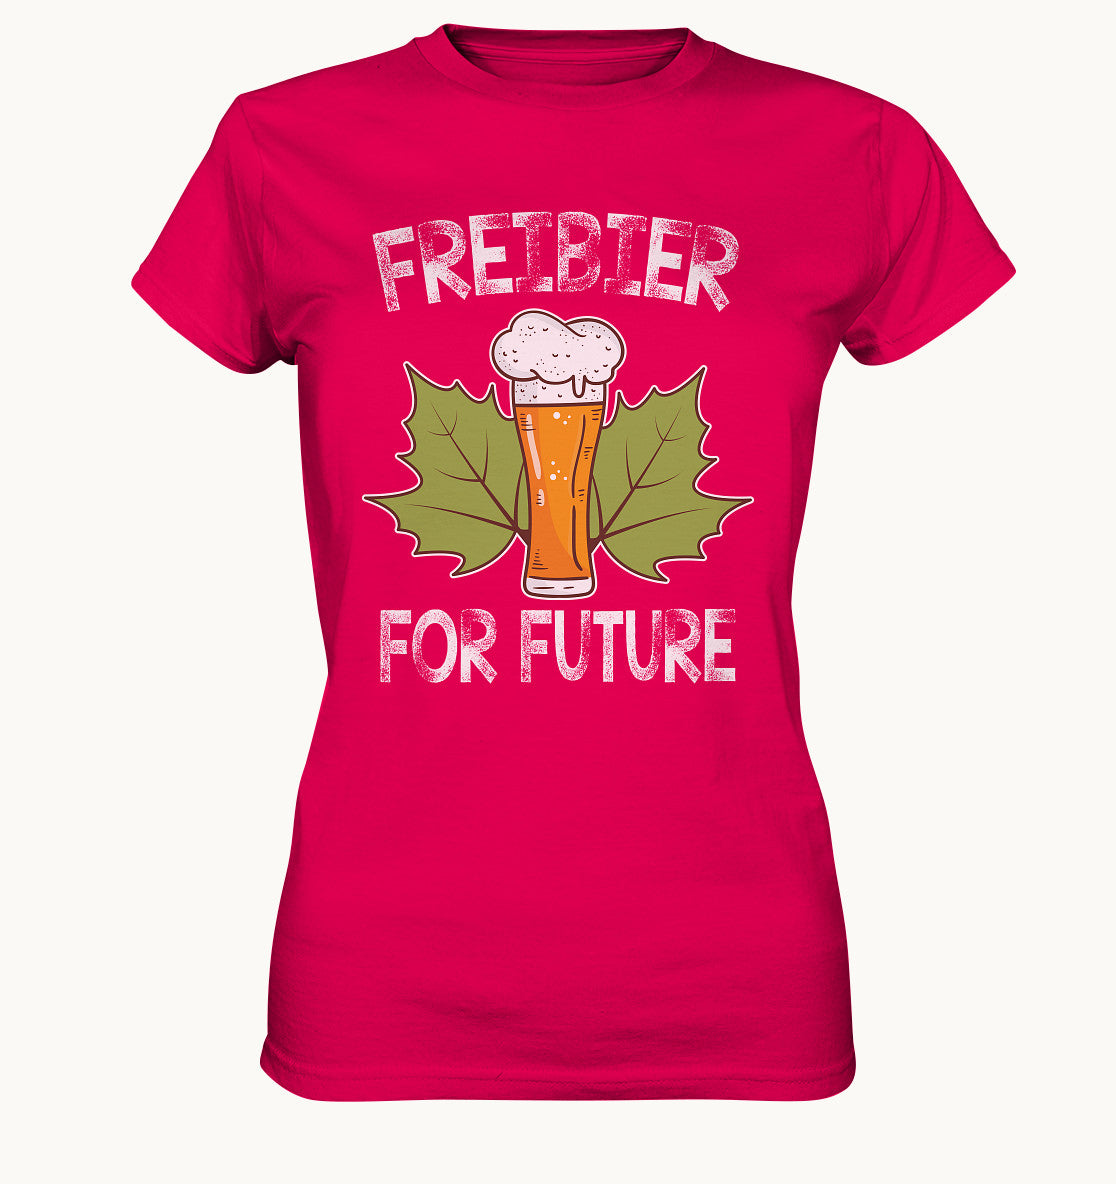 Freibier for Future